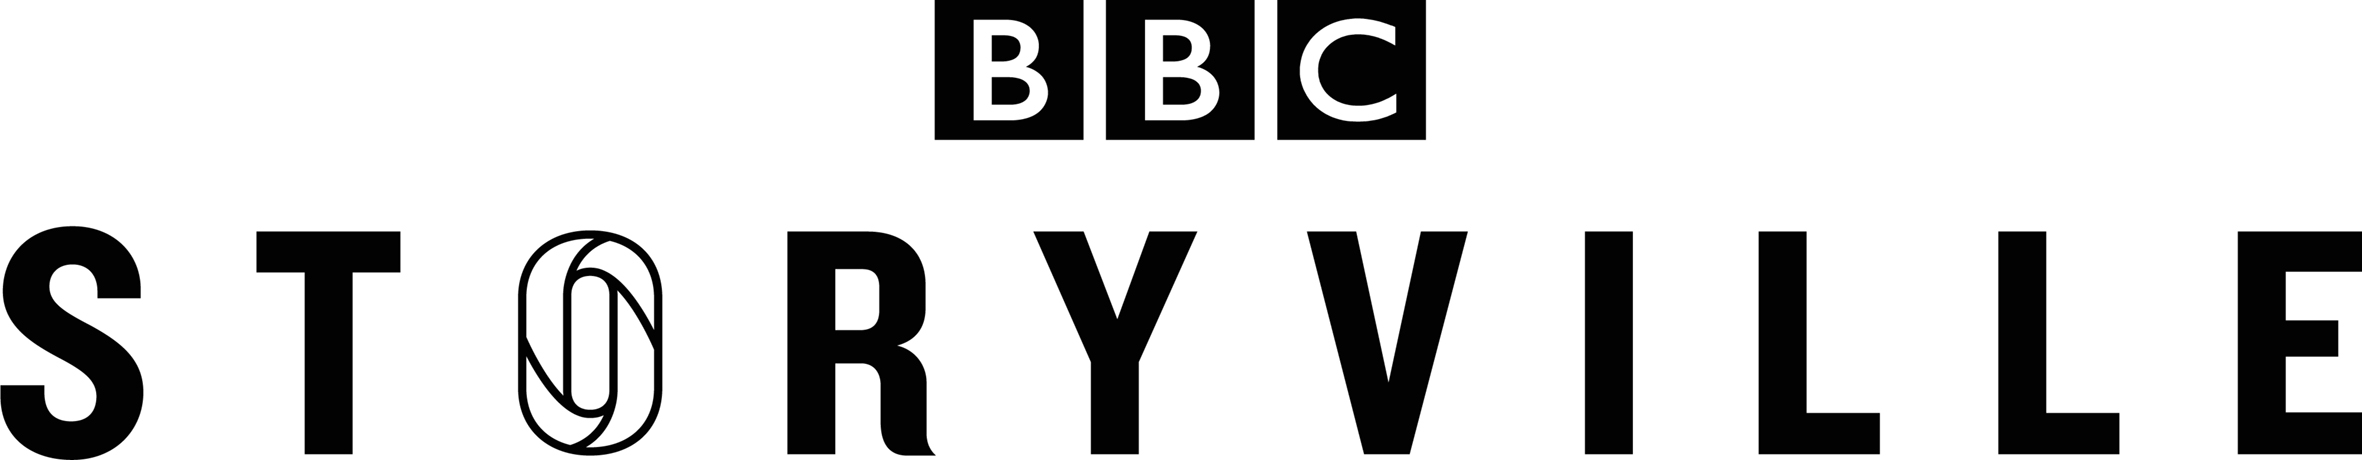 BBC Storyville logo